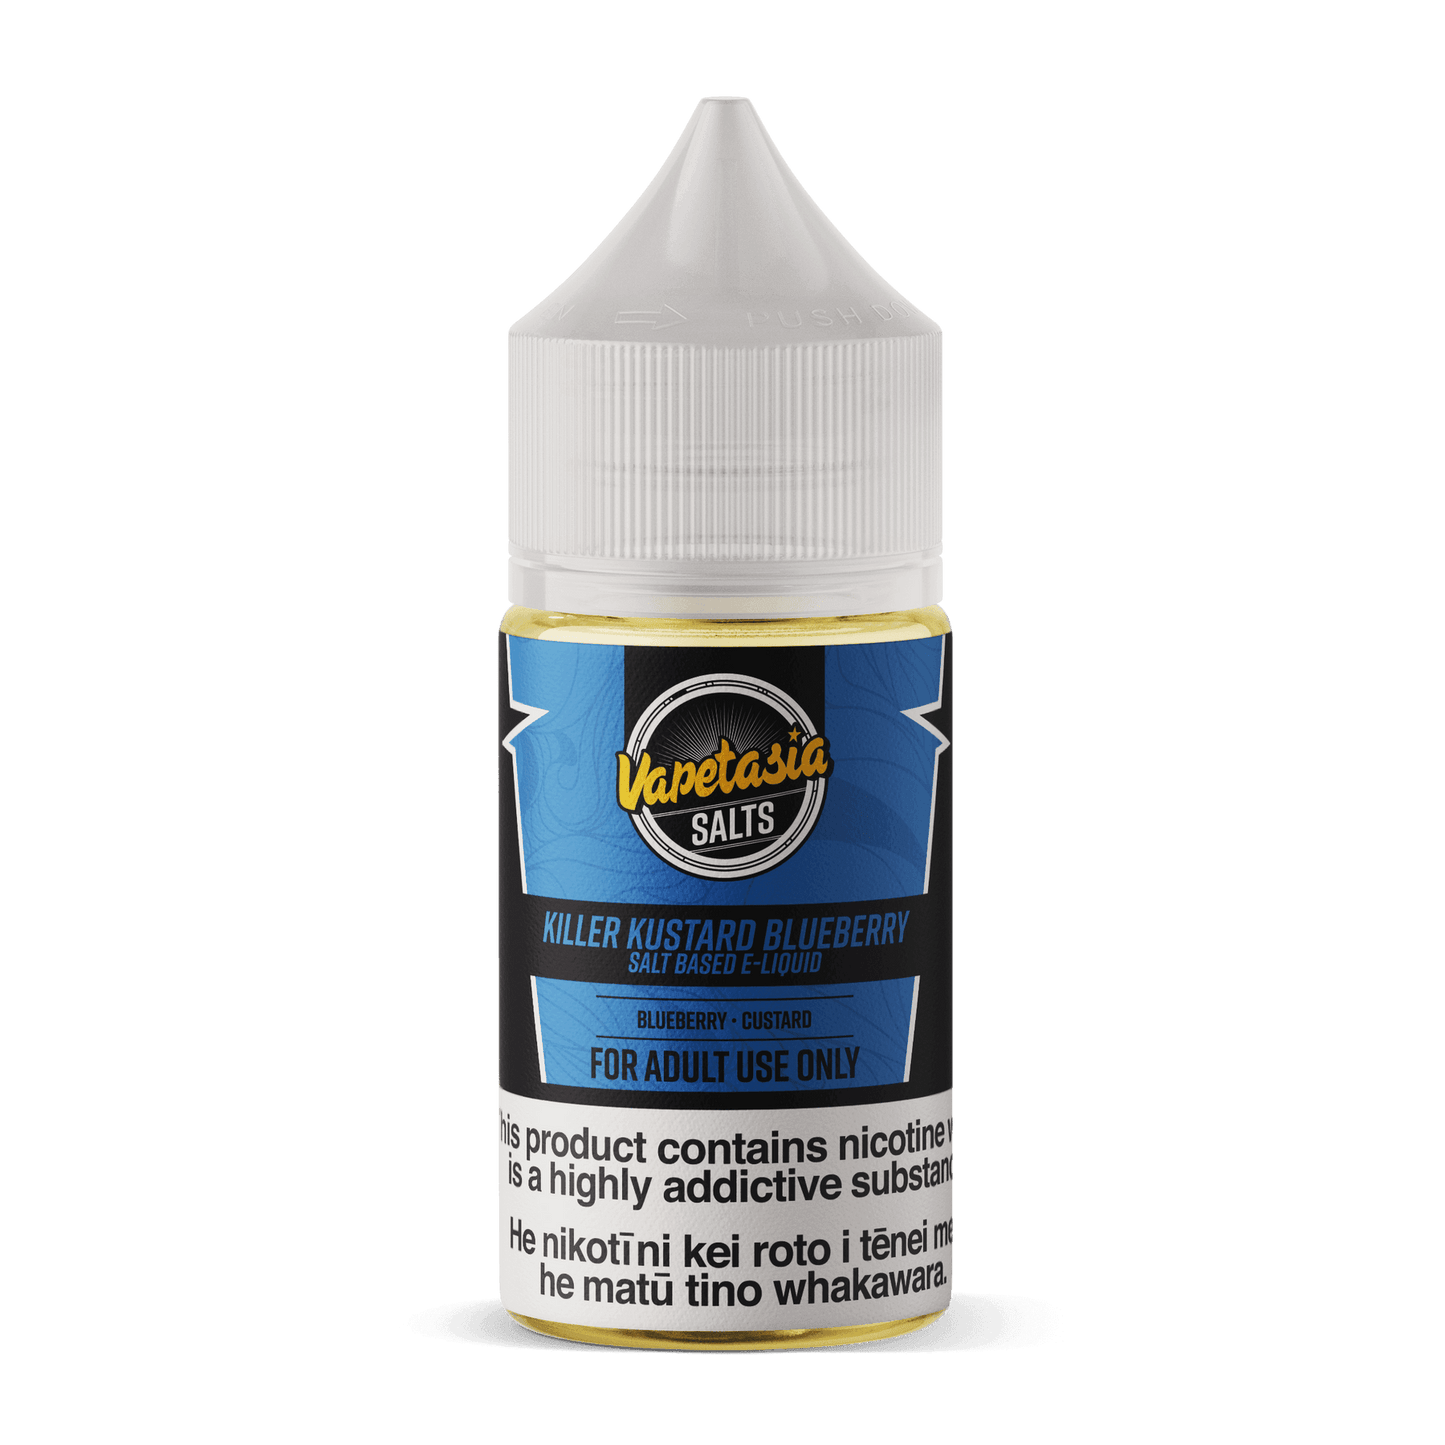 Vapetasia Salts - Killer Kustard Blueberry - 2020 Vapes